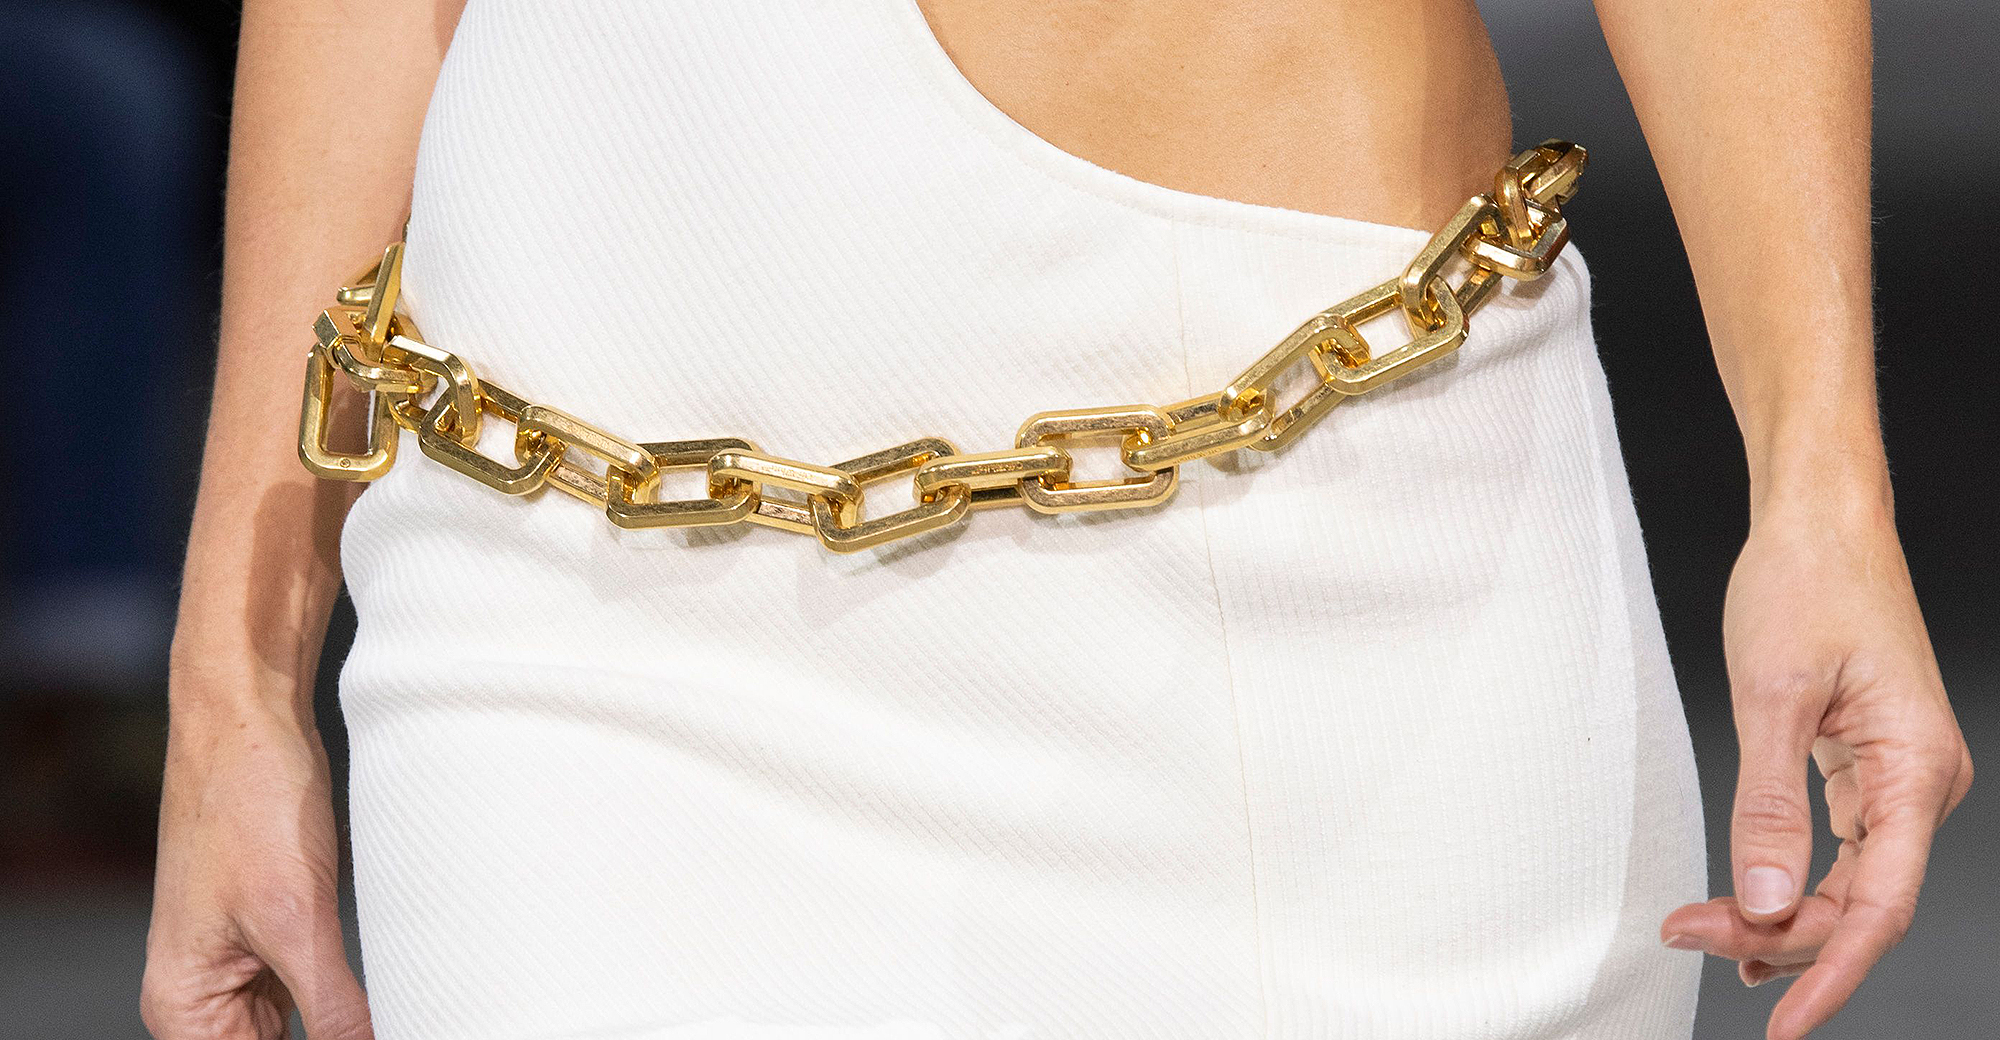 21 Best Designer Belts For Women